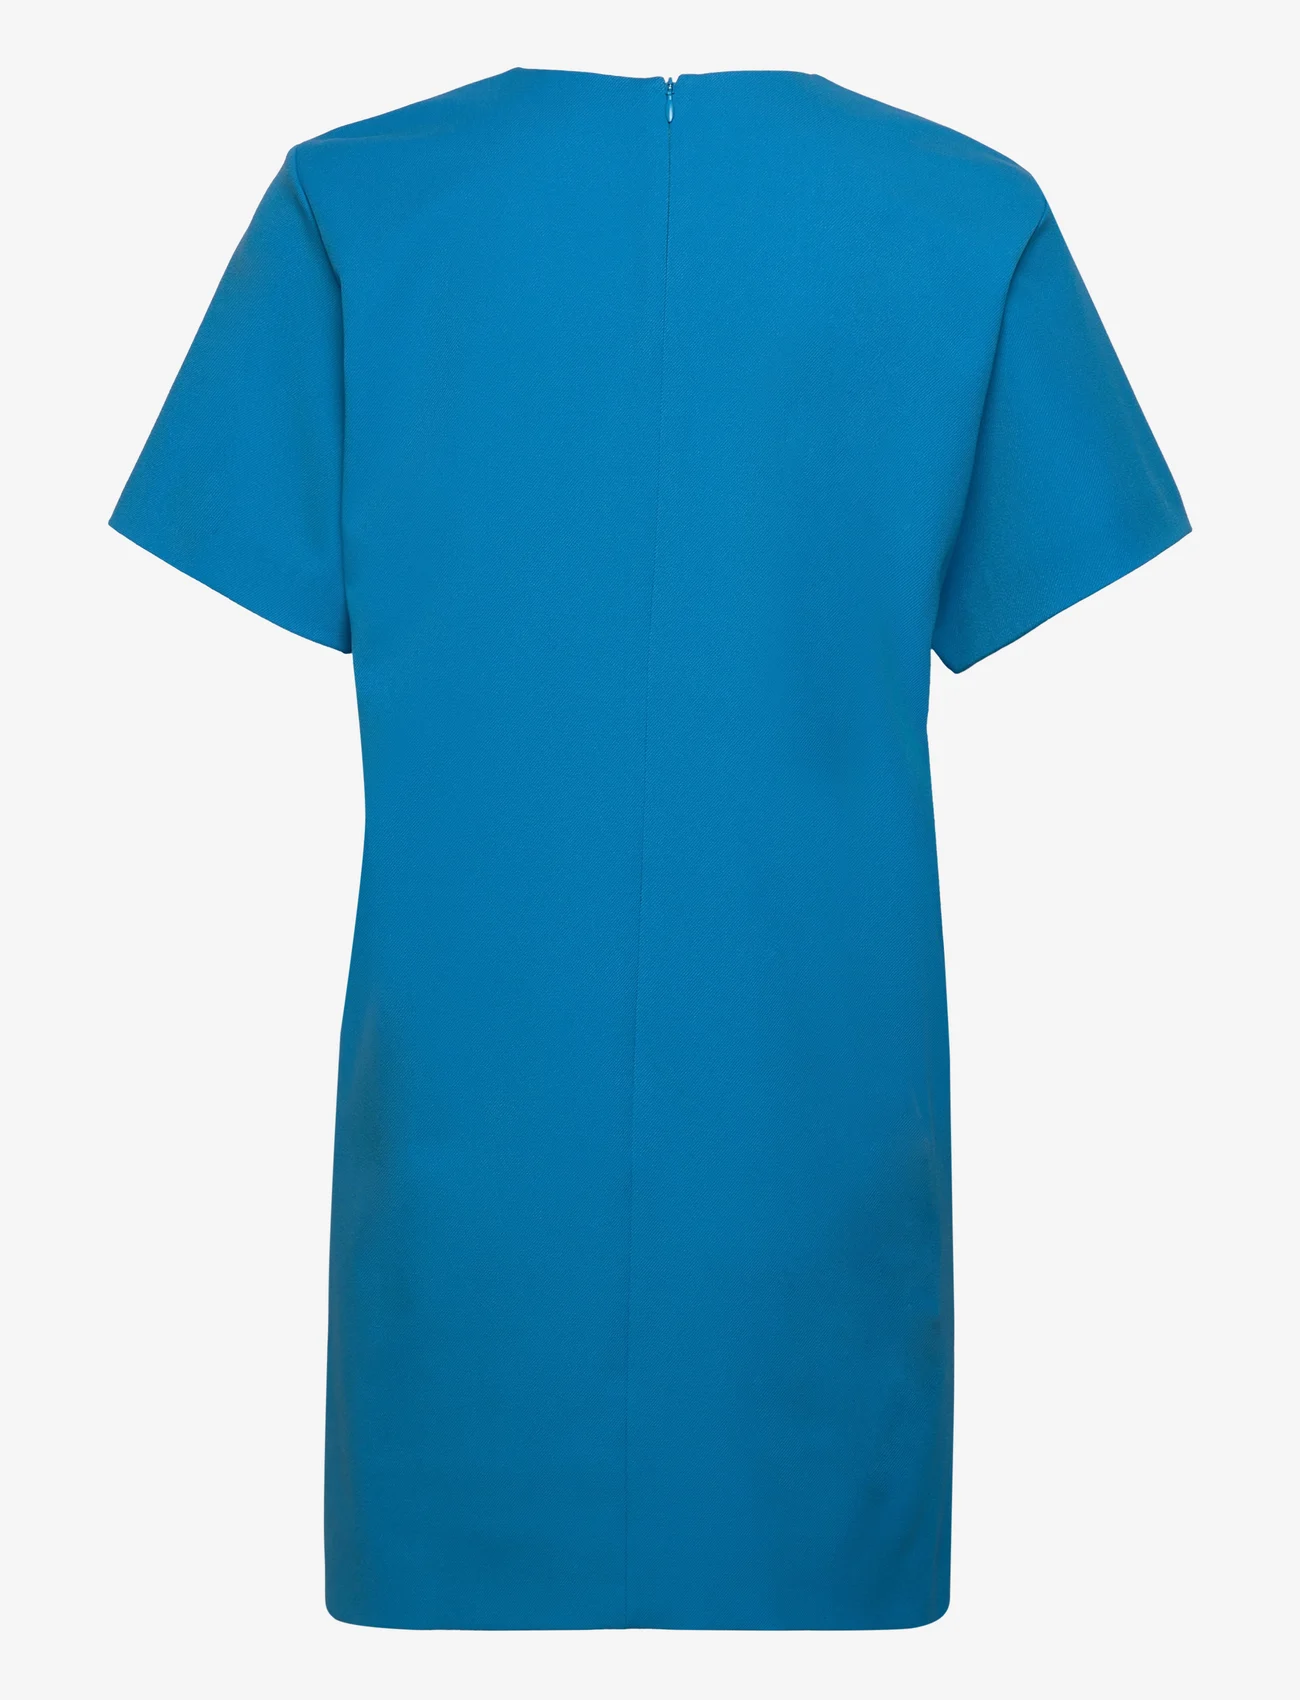 HUGO - Kulianna - t-shirt jurken - bright blue - 1